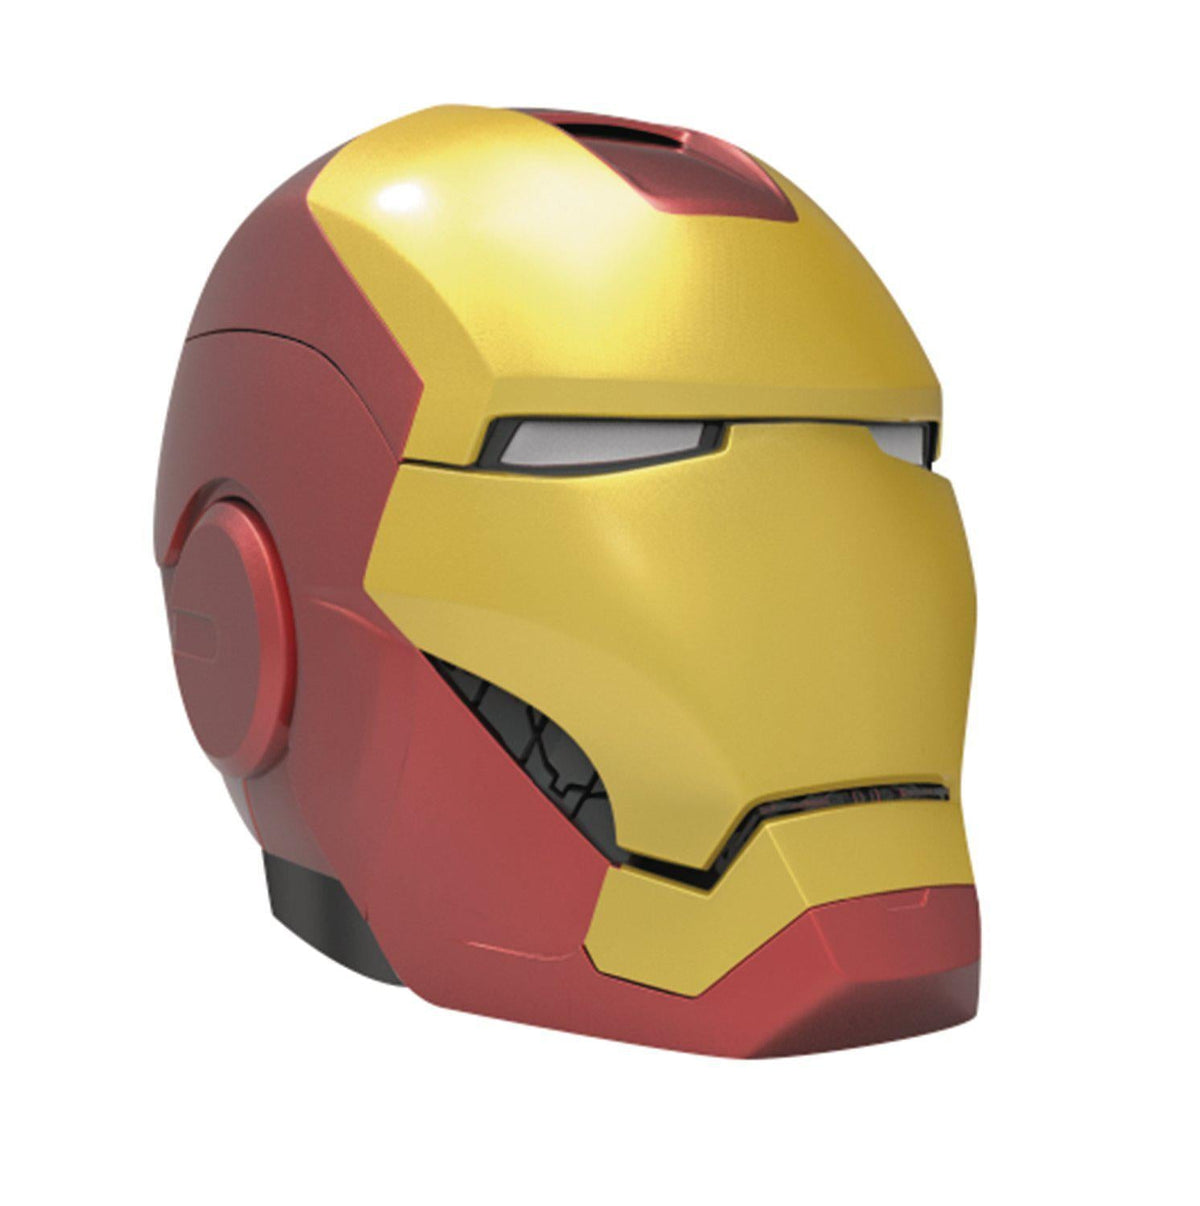 [OPEN BOX] KIDdesigns Bluetooth Helmet Speaker Marvel Iron Man